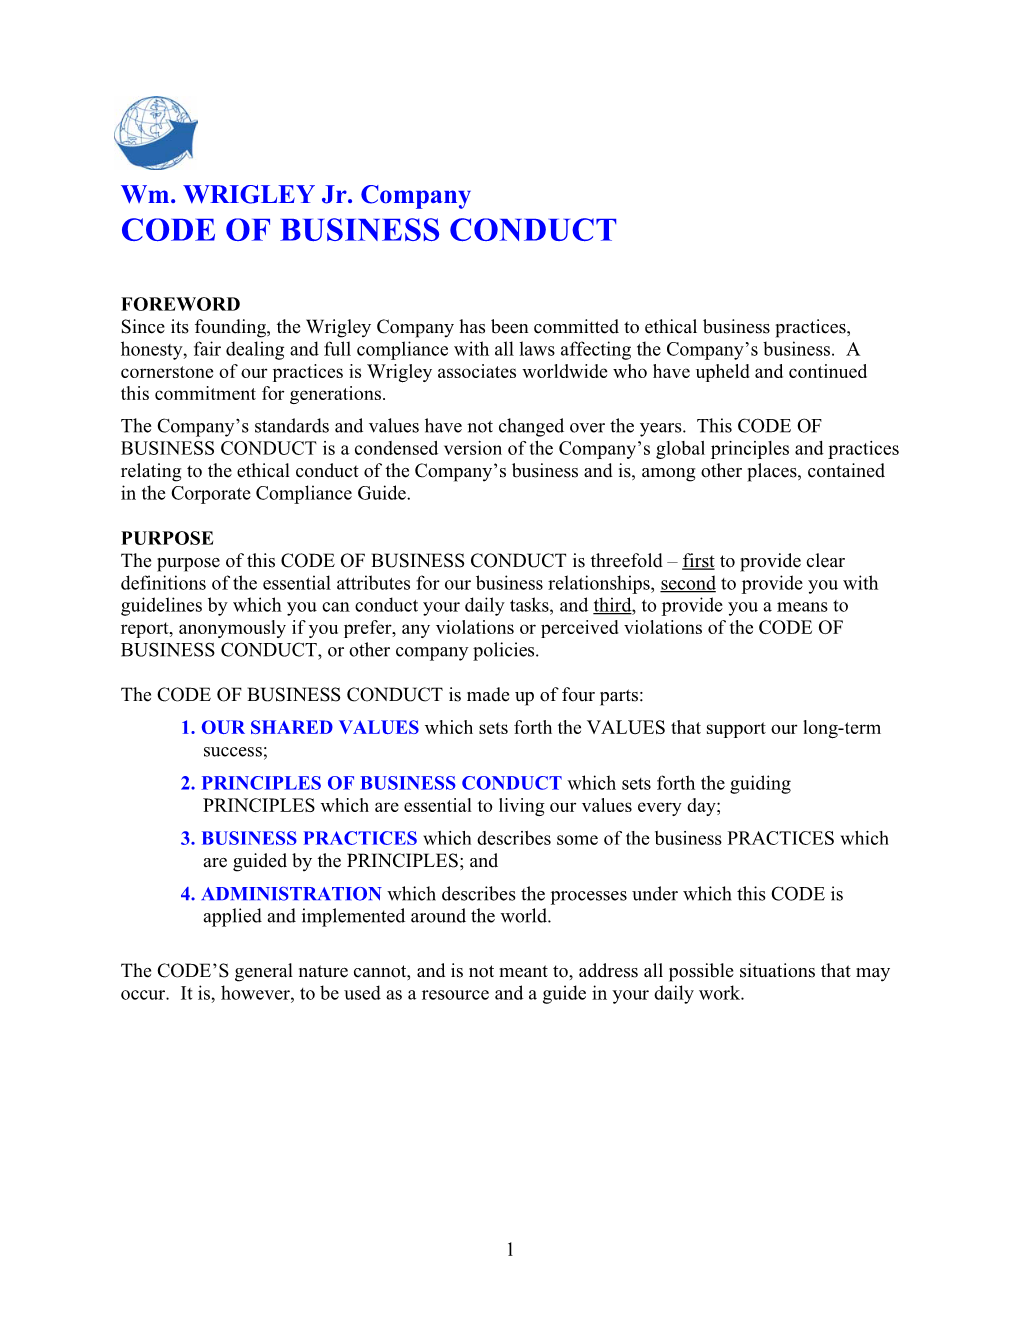 Wm. WRIGLEY Jr. Company CODE of BUSINESS CONDUCT